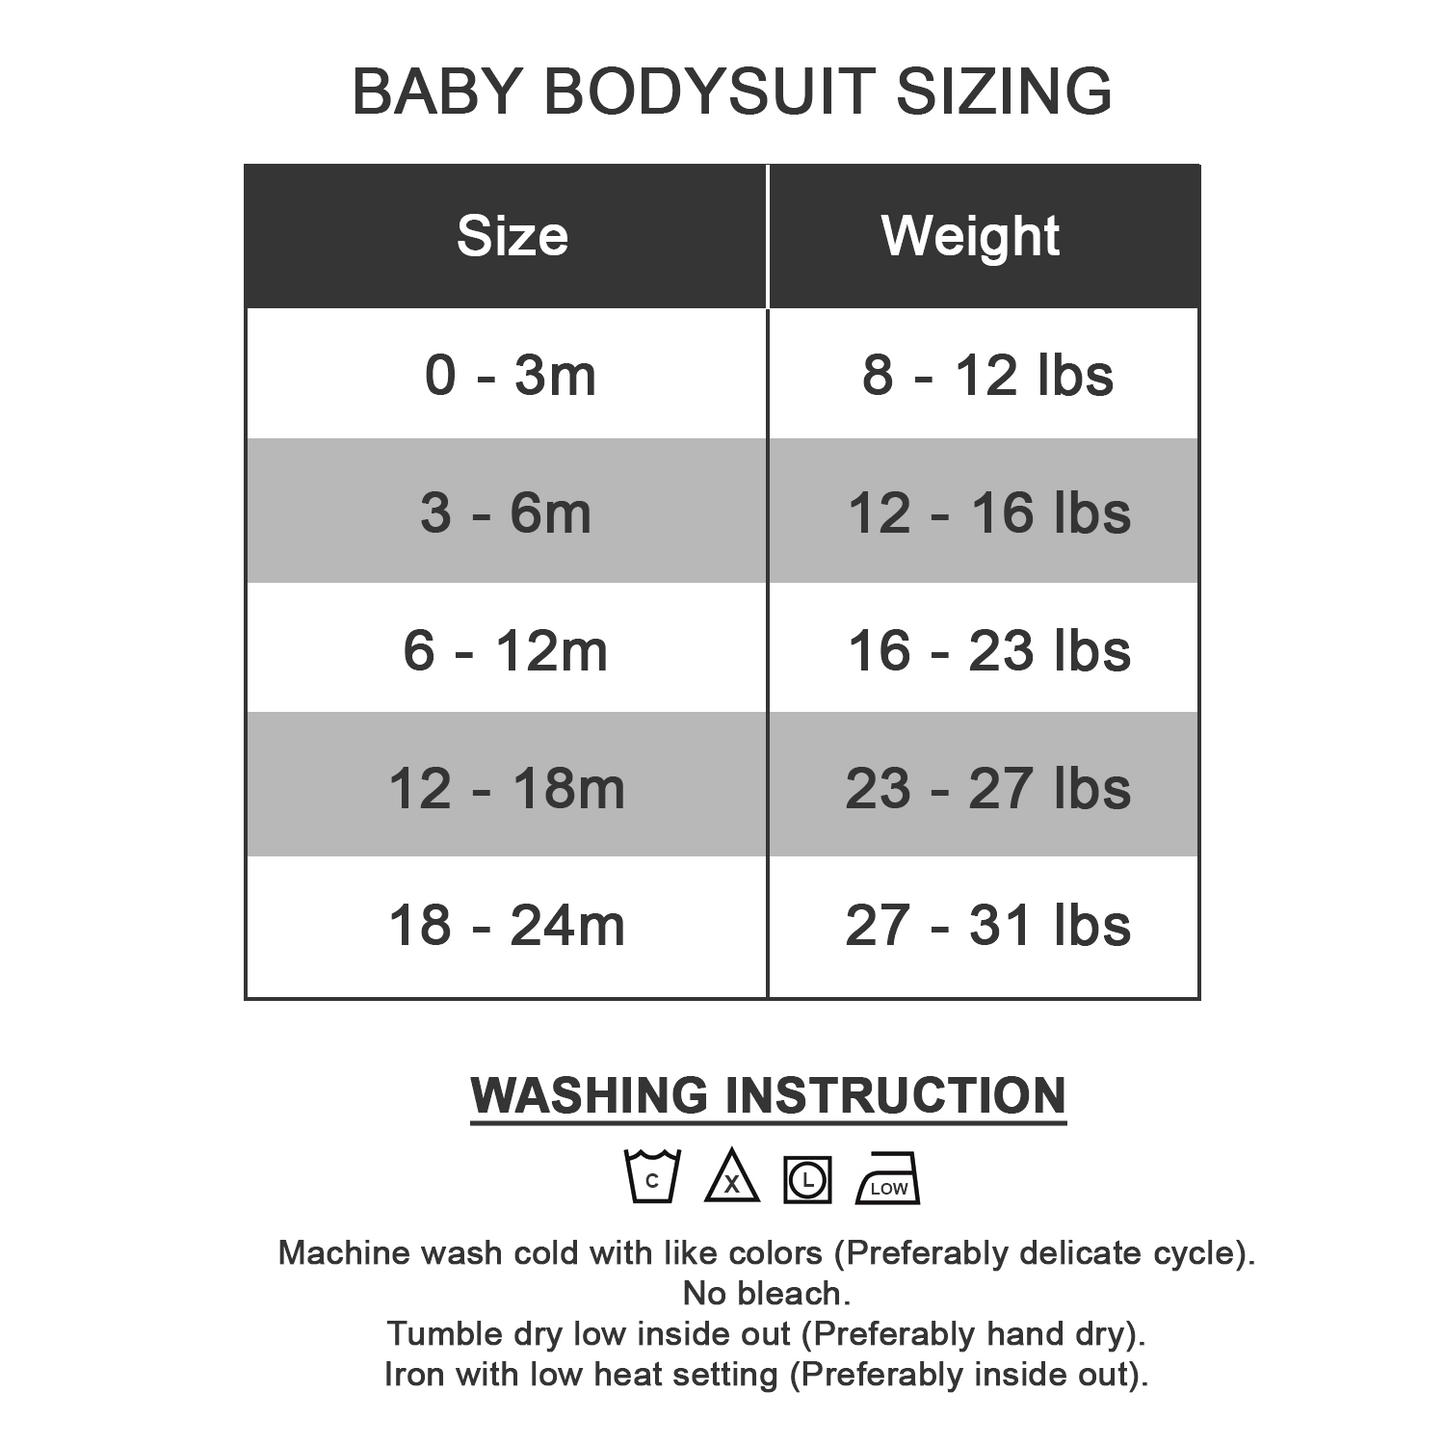 [Custom Image] Organic Baby Bodysuit Short Sleeves